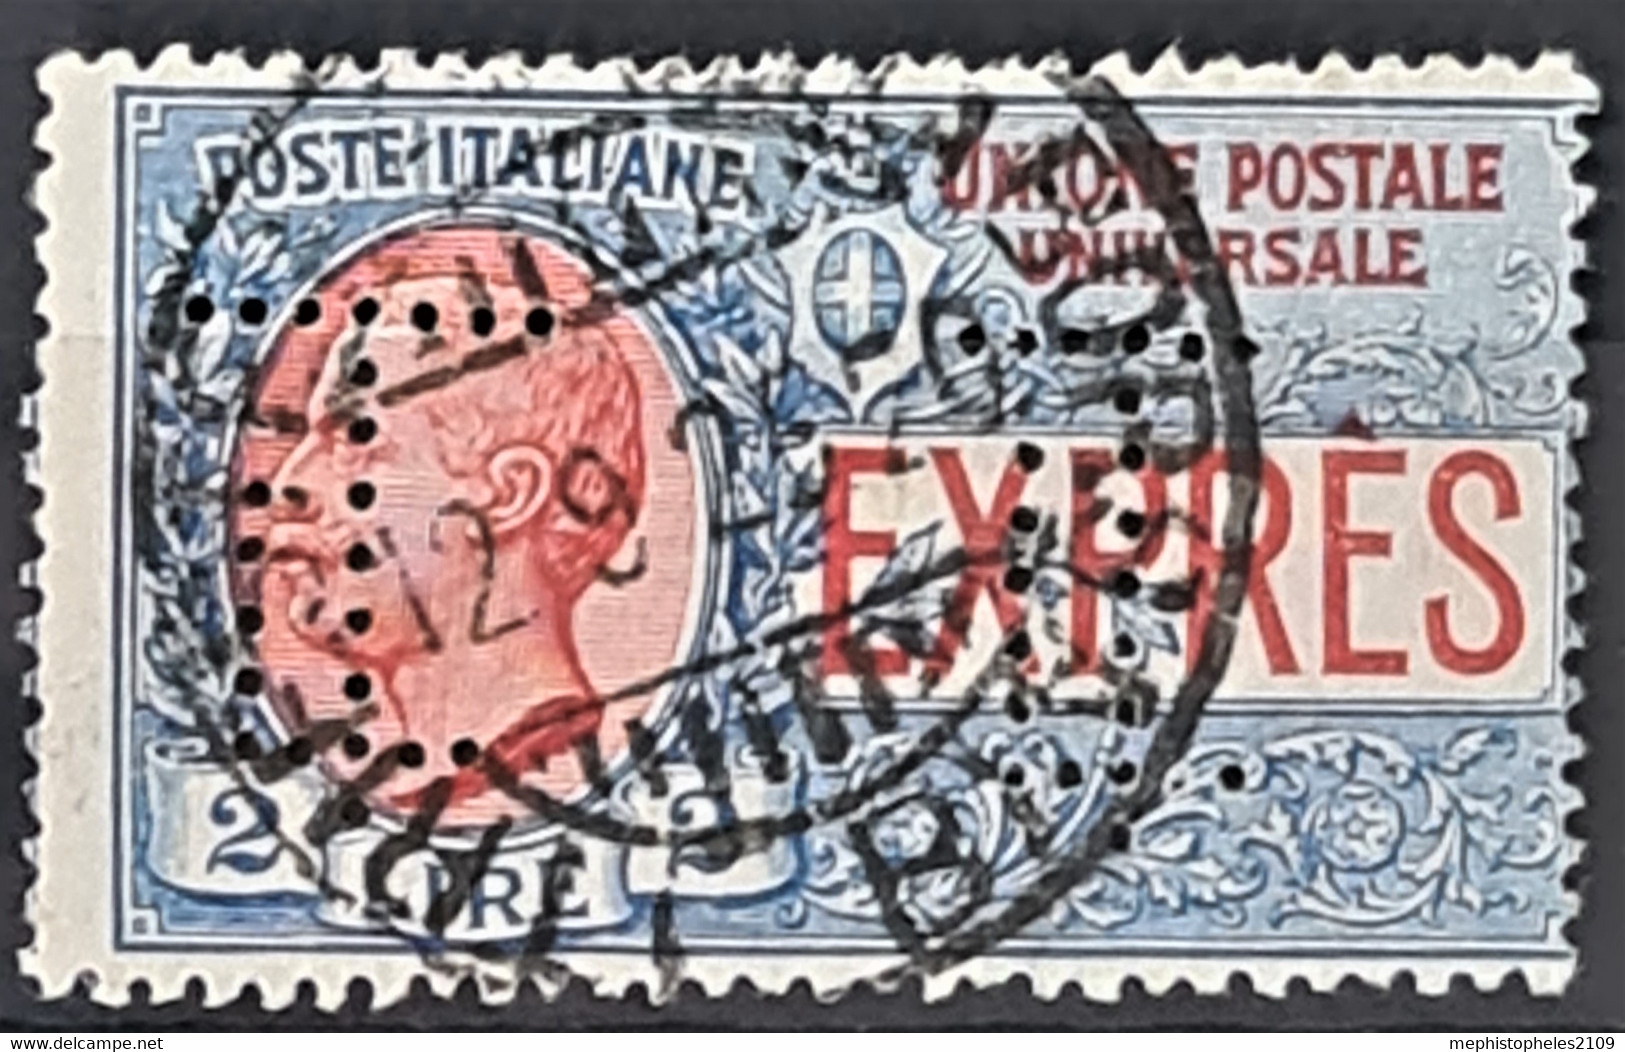 ITALY / ITALIA 1925 - Canceled - Sc# E7 - Express Mail 2L - Eilsendung (Eilpost)